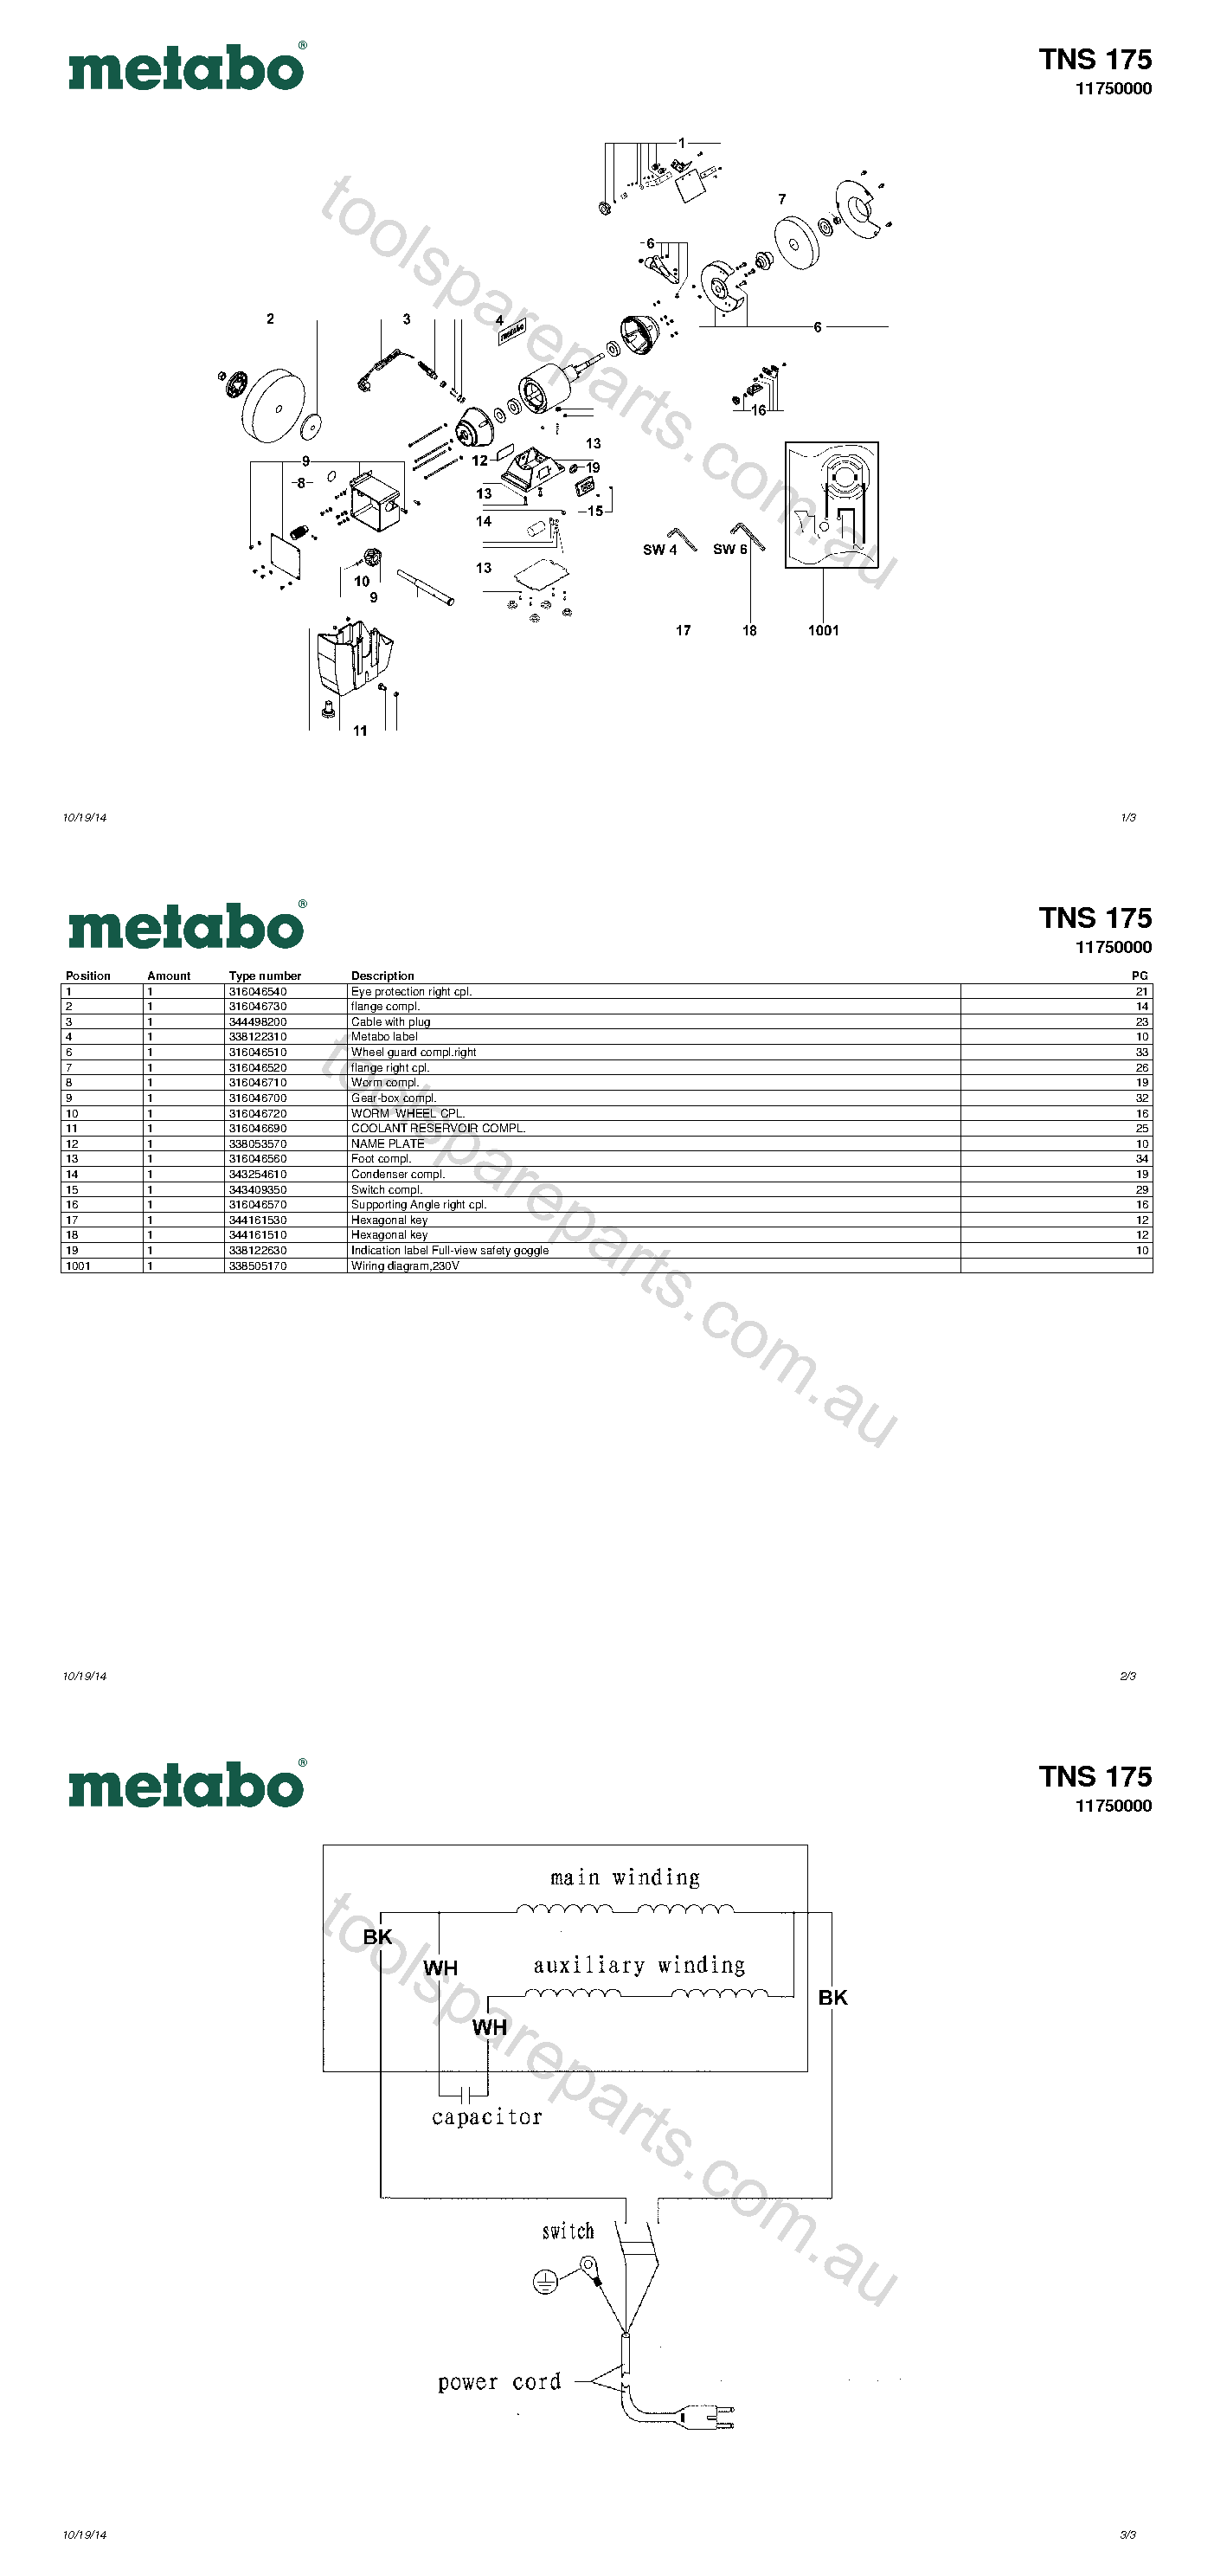 Metabo TNS 175 11750000  Diagram 1